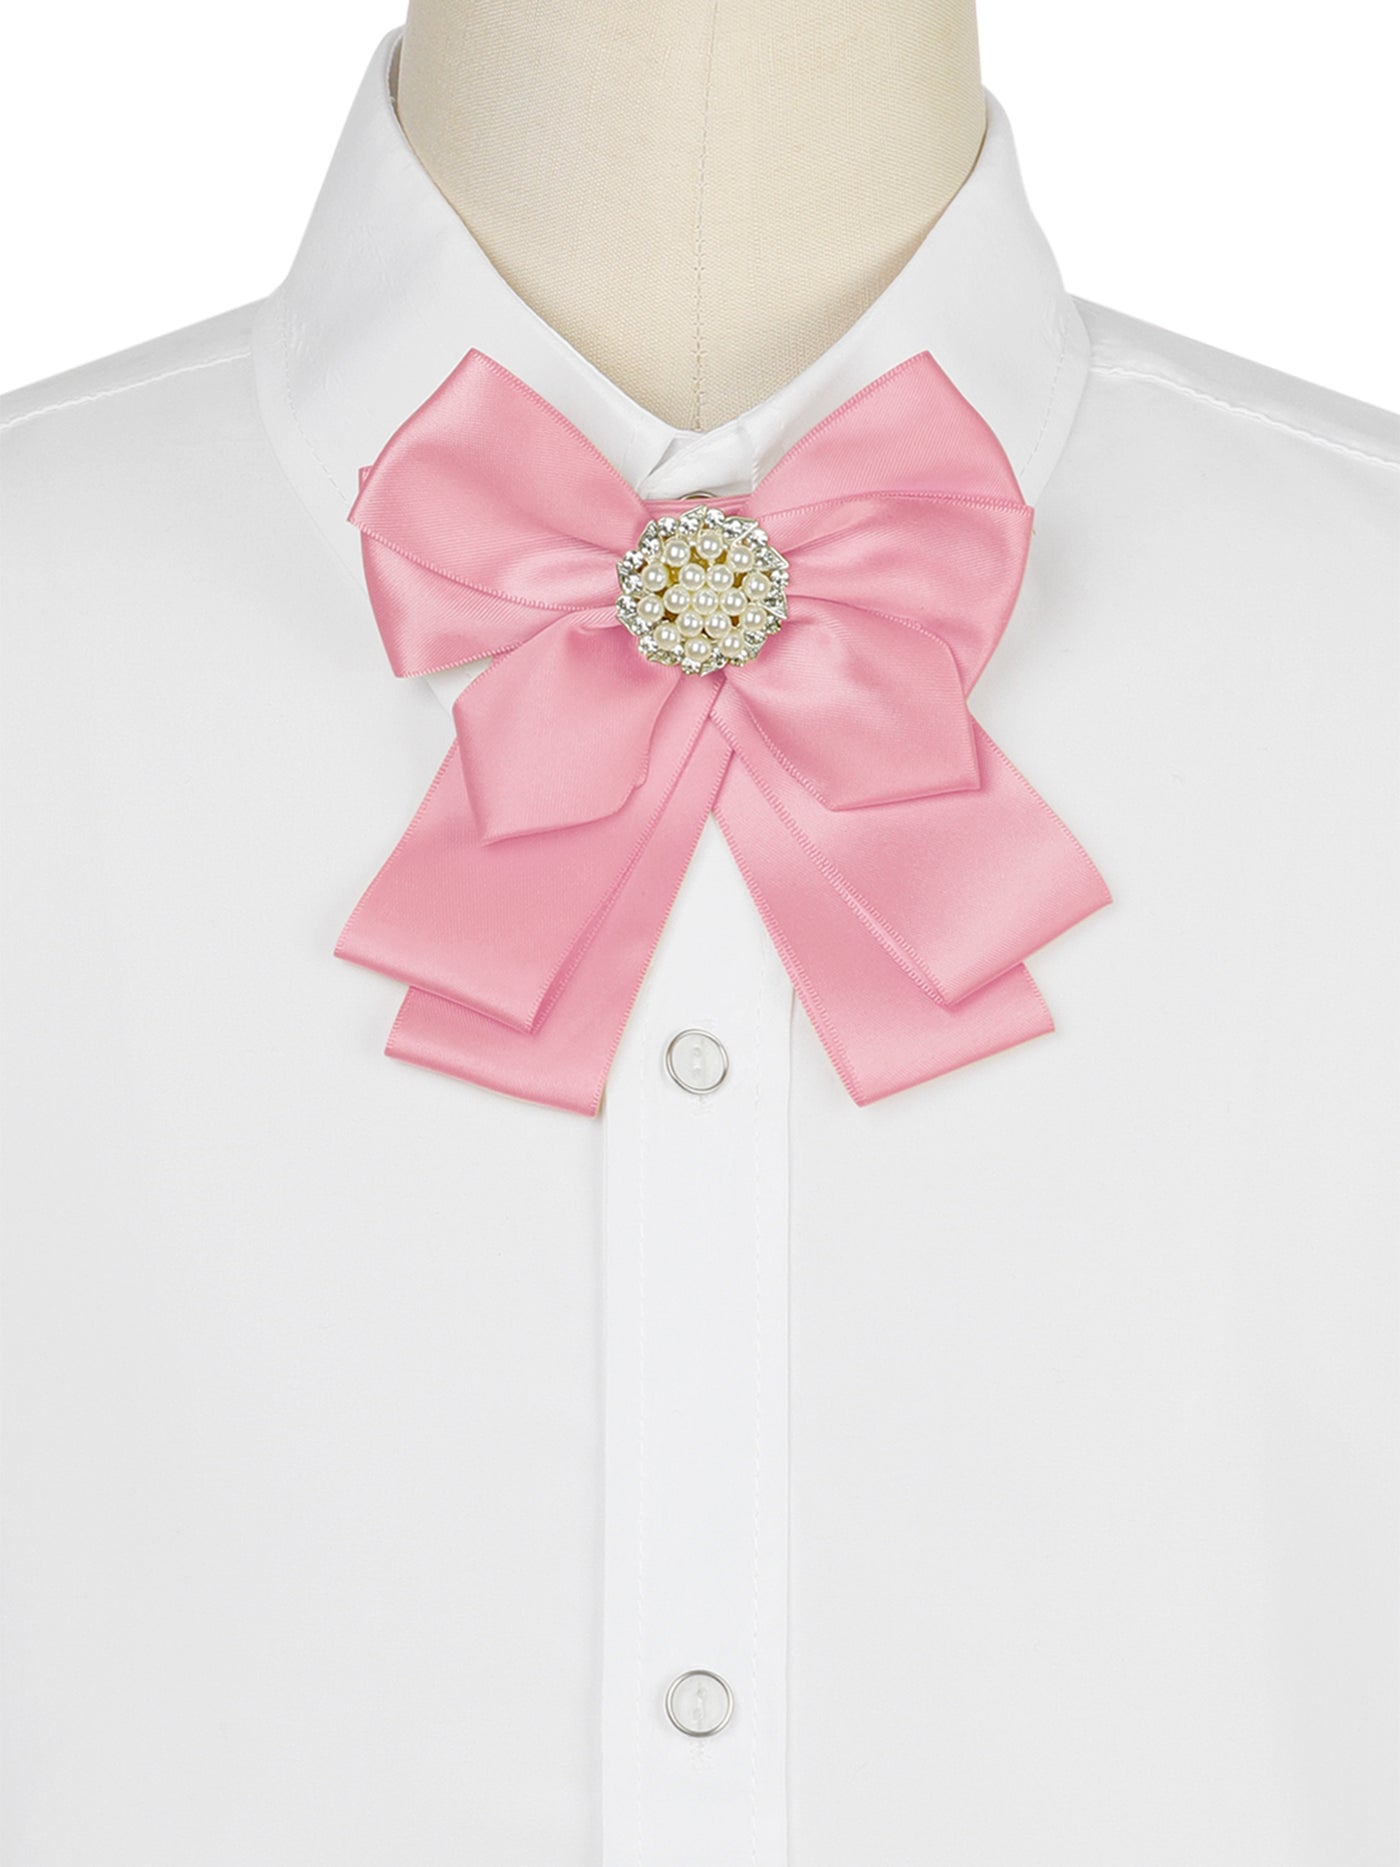 Bublédon Women's Ribbon Brooch Bowknot Necktie School Uniform Pin Collar Bow Tie with Pearl